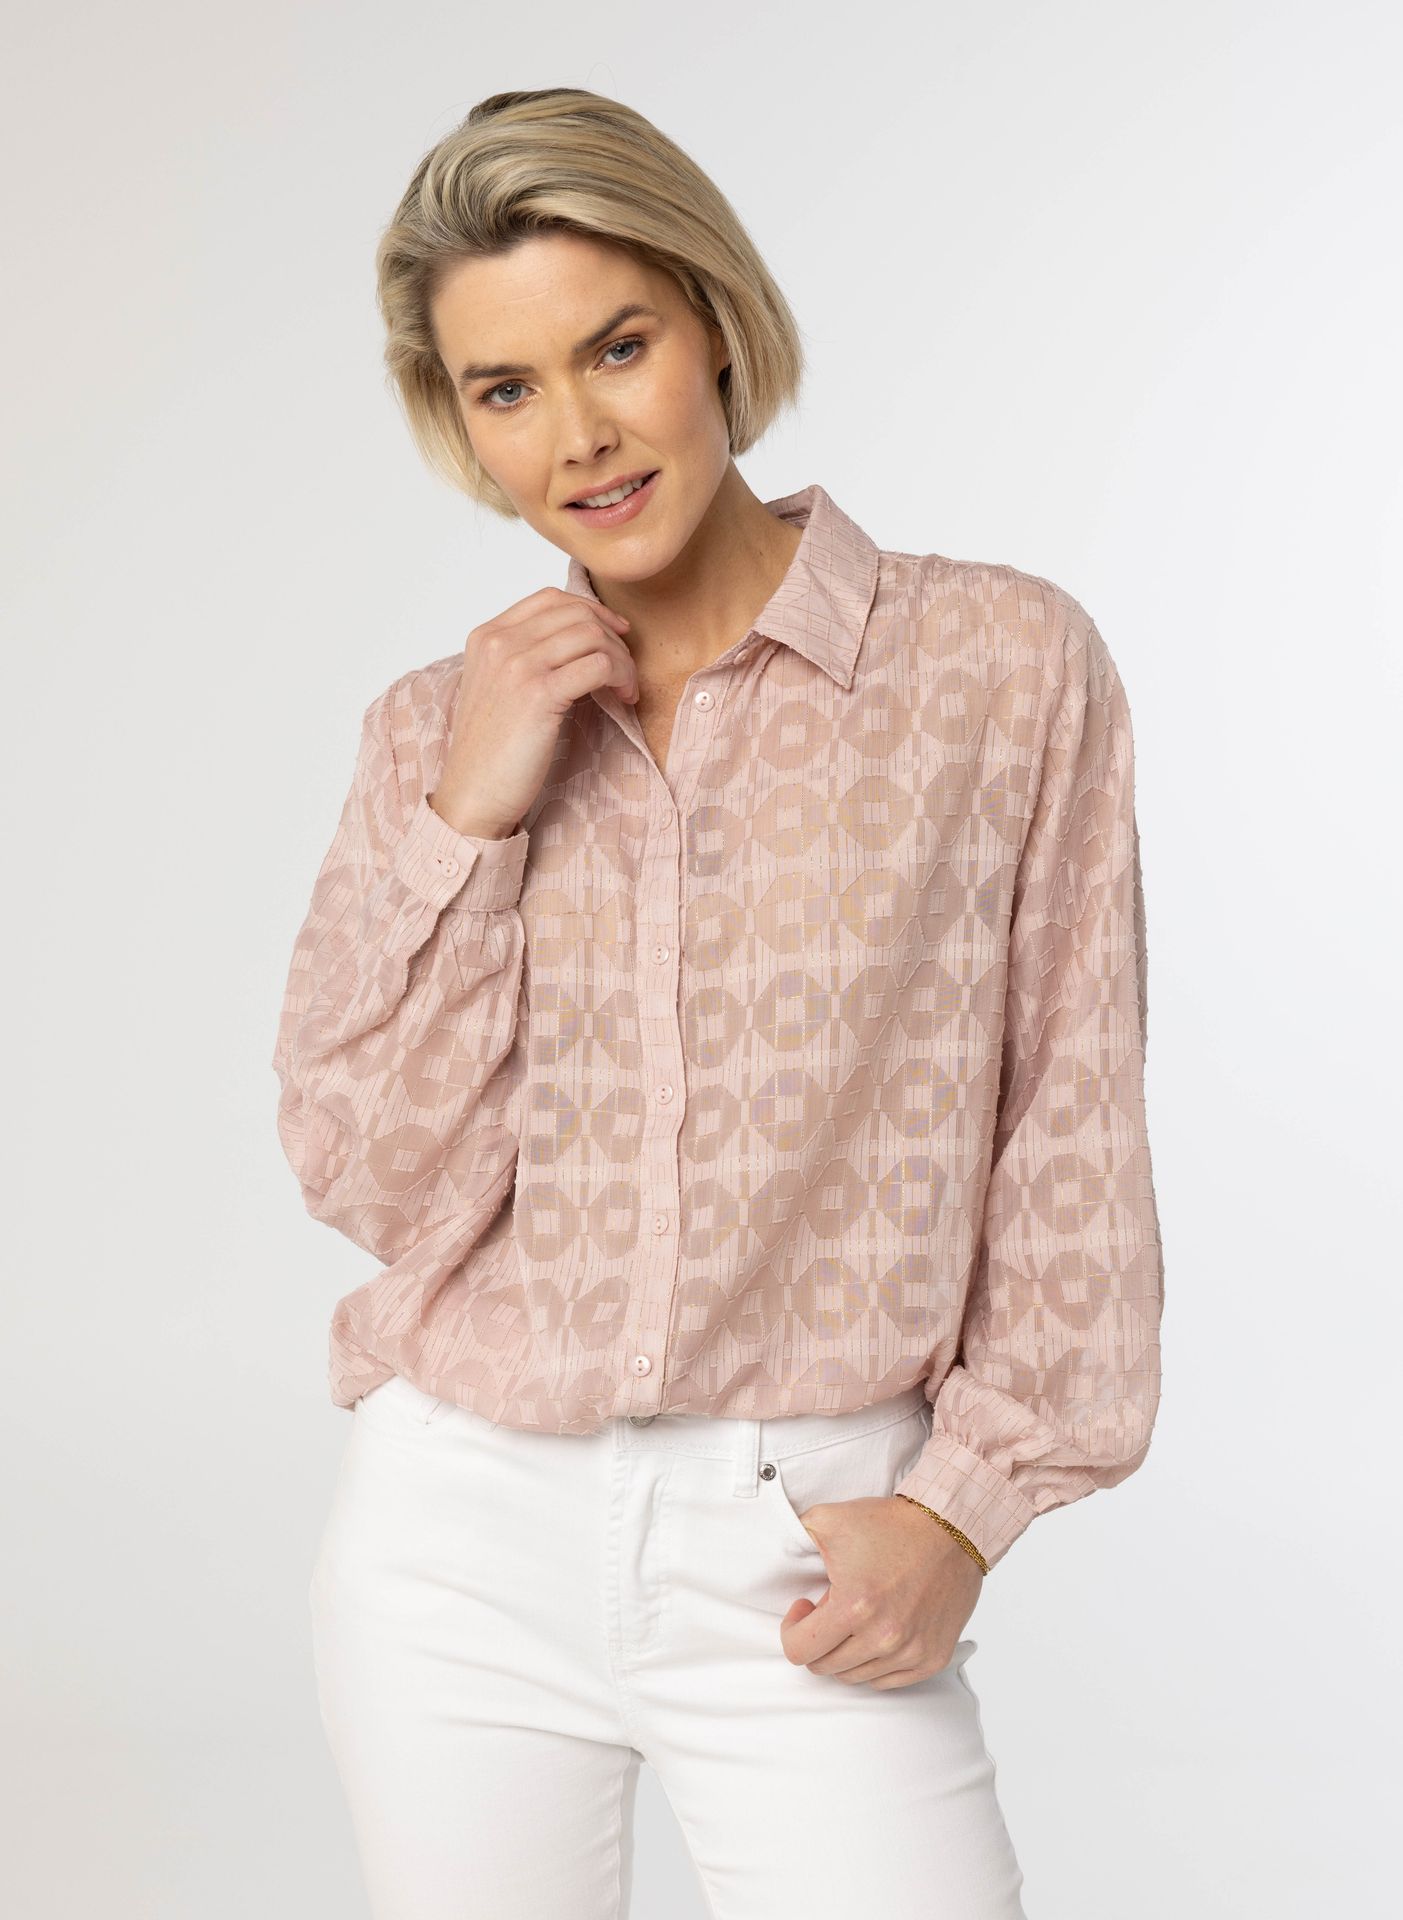 Norah Lichtroze blouse met glitter rose 214119-907